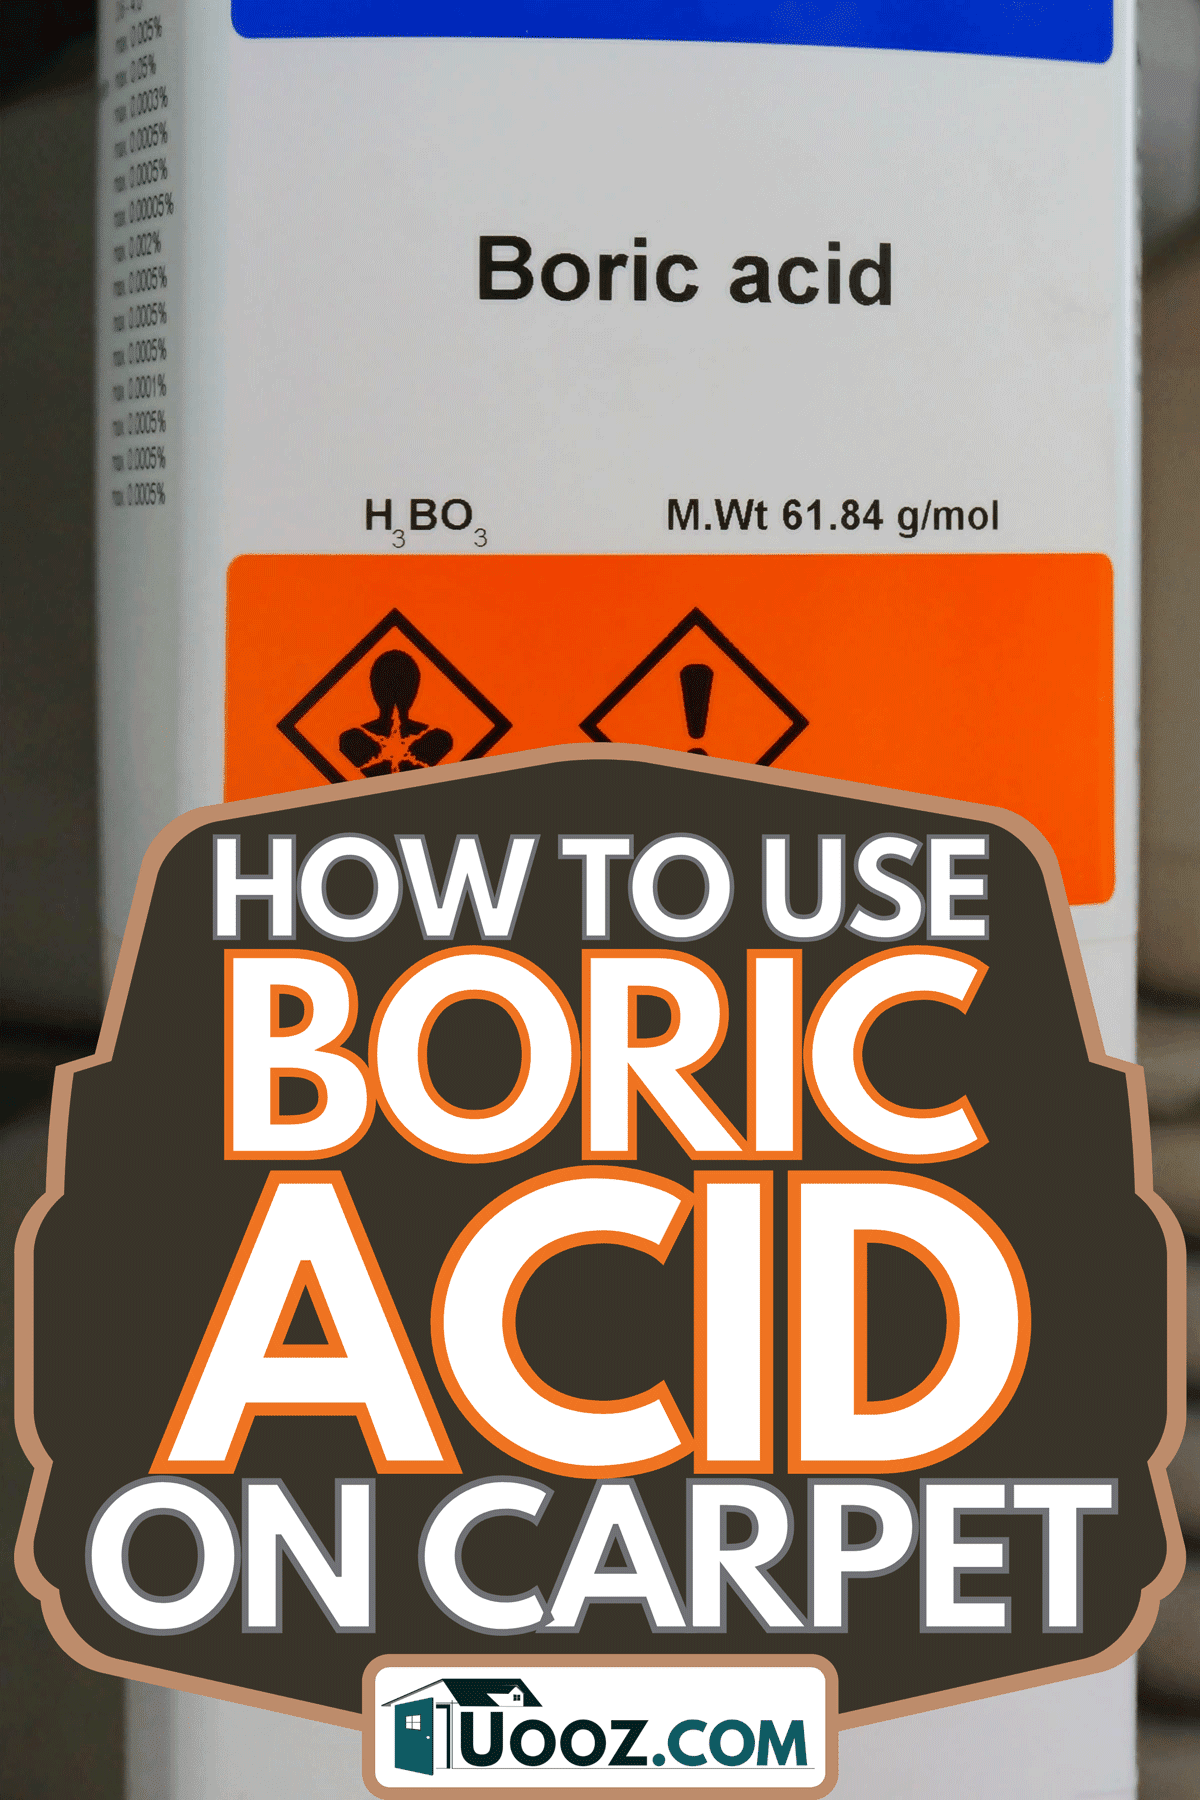 A bottle of boric acid, How To Use Boric Acid On Carpet